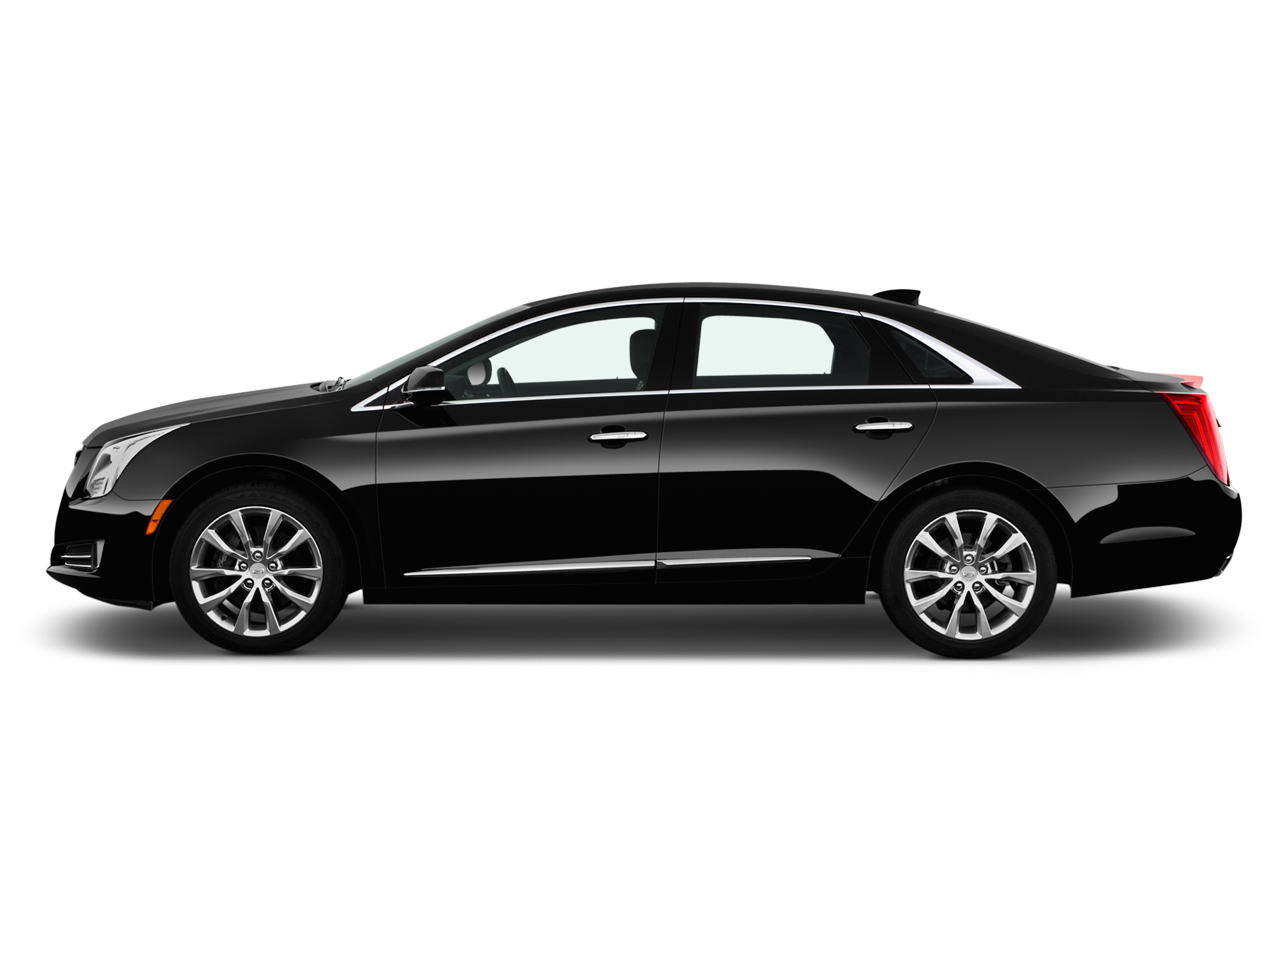 Cadillac XTS exterior - Side Profile